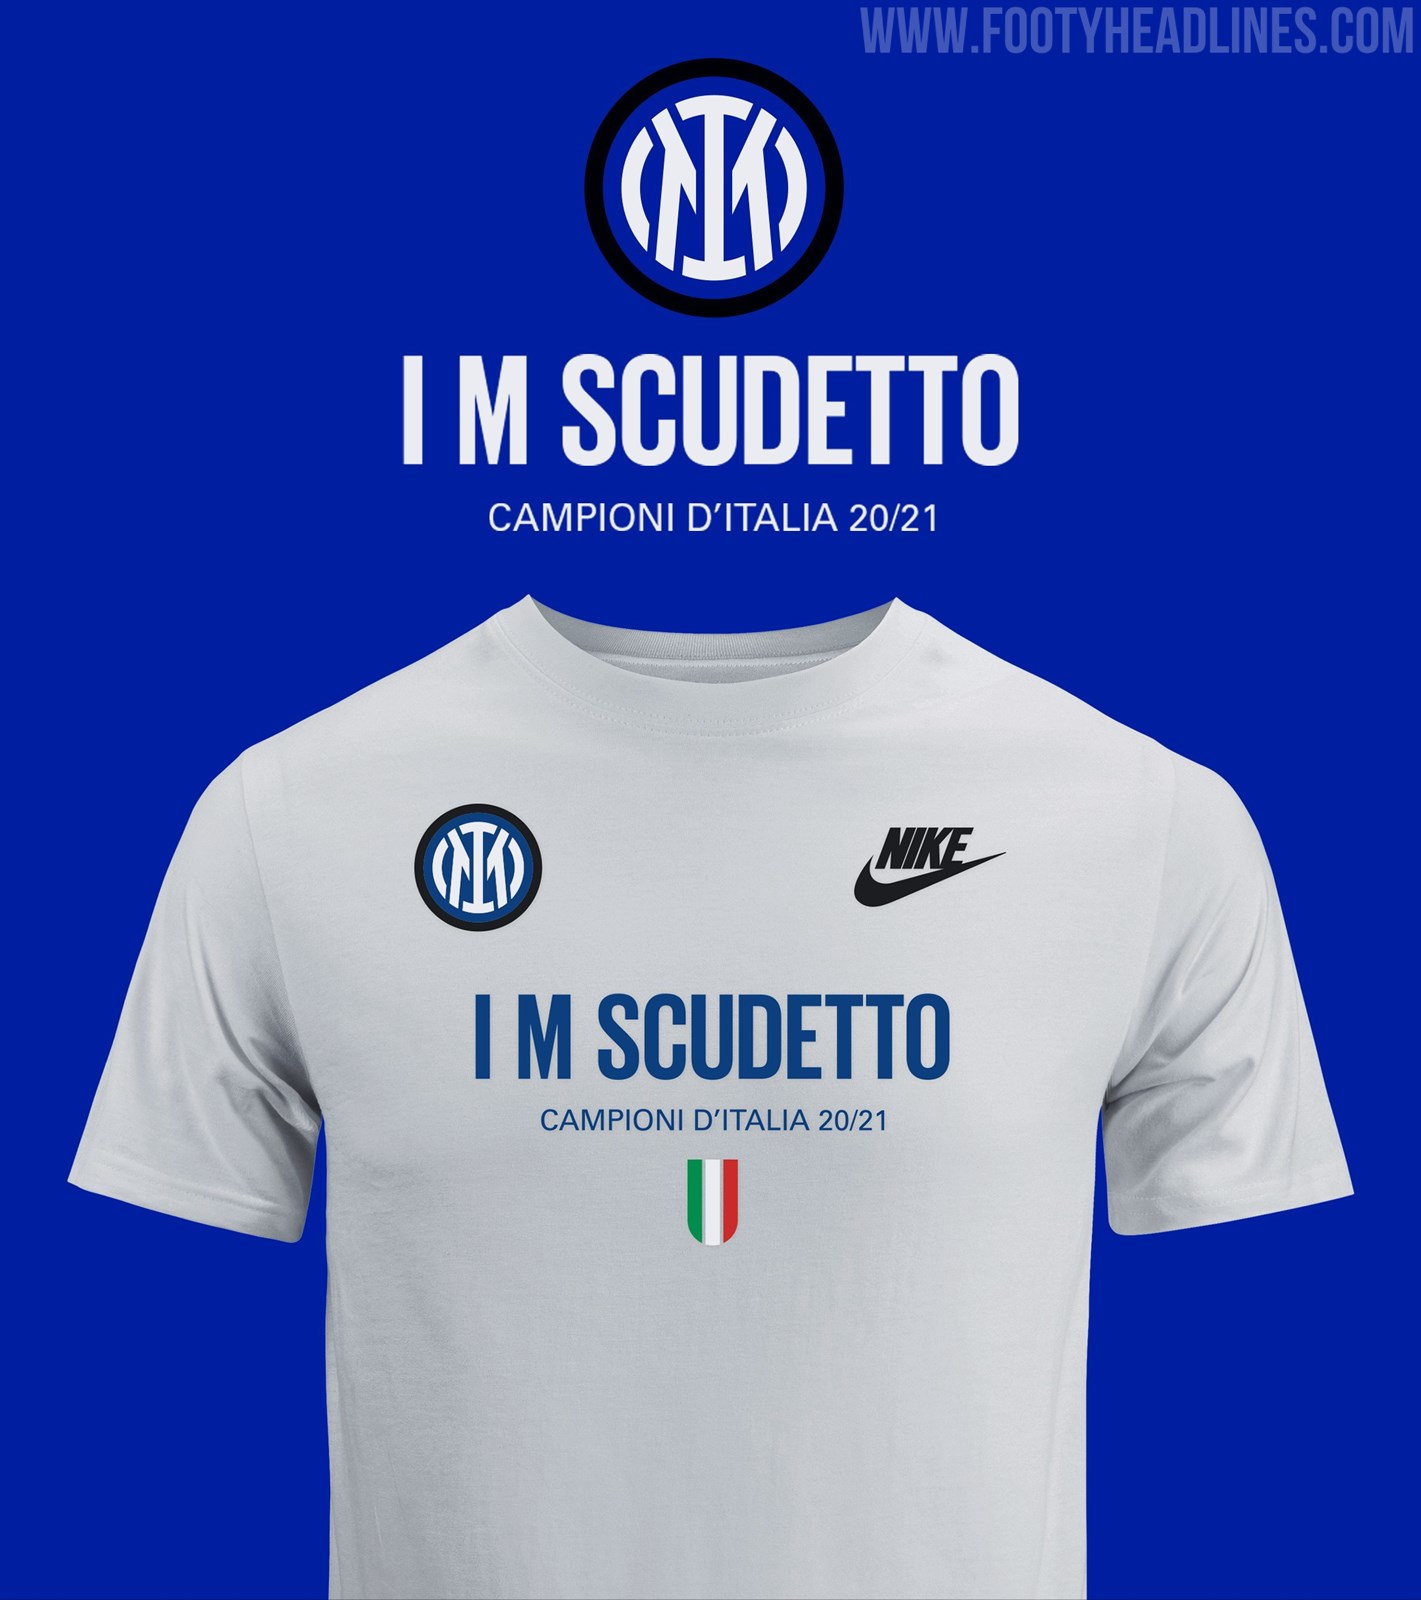 Inter awarded Scudetto - Eurosport